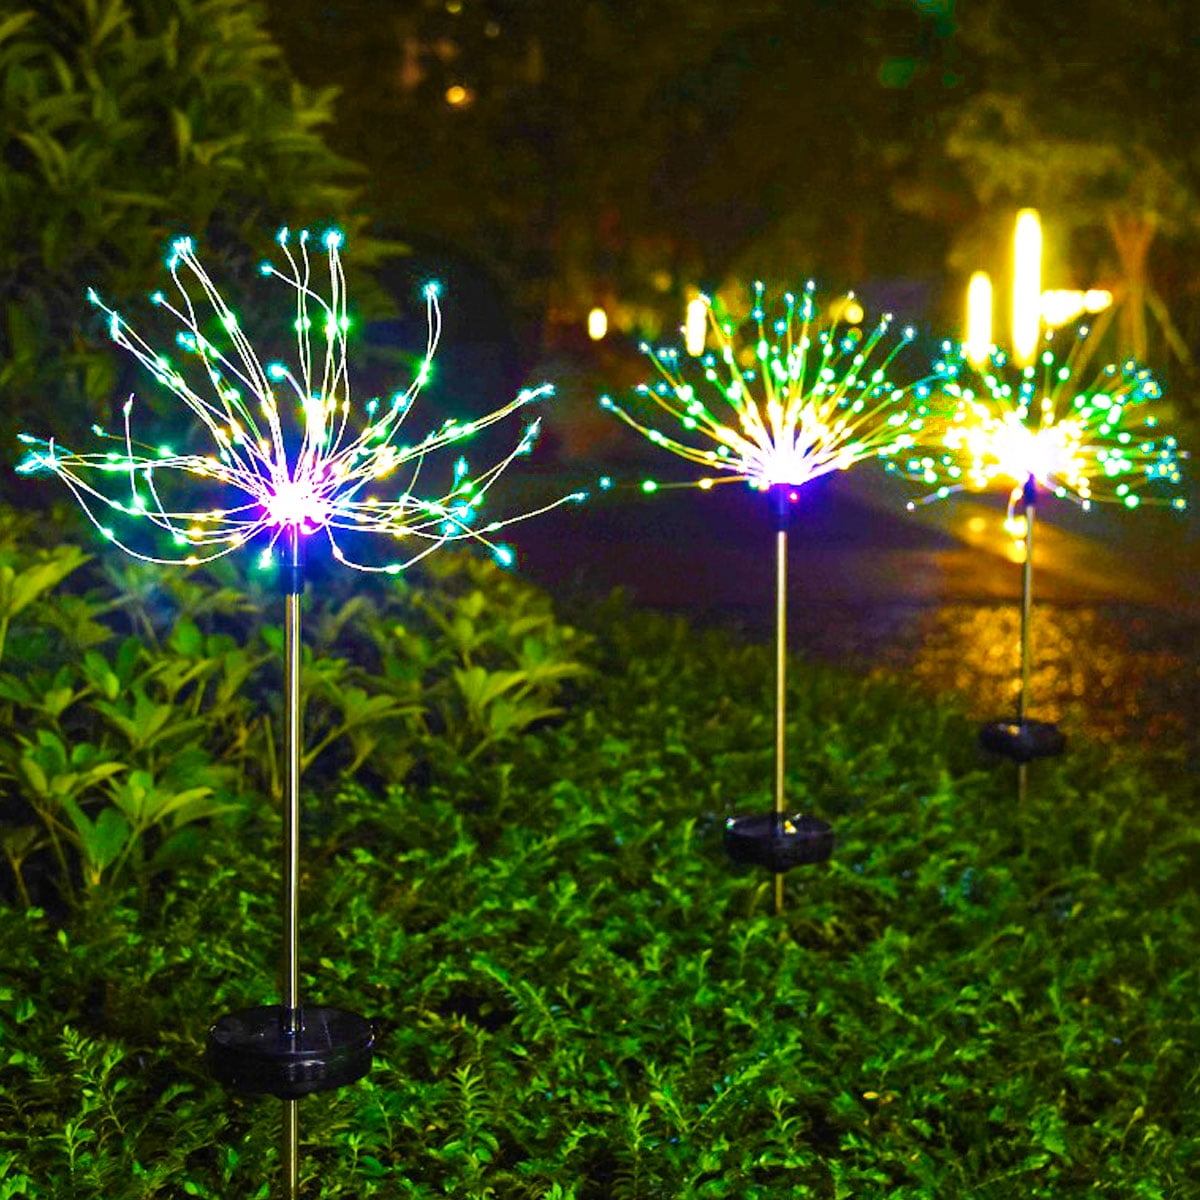 Details about   150 LED Solar Firework Lights Waterproof Outdoor Path Garden Lawn Decor Lamp 